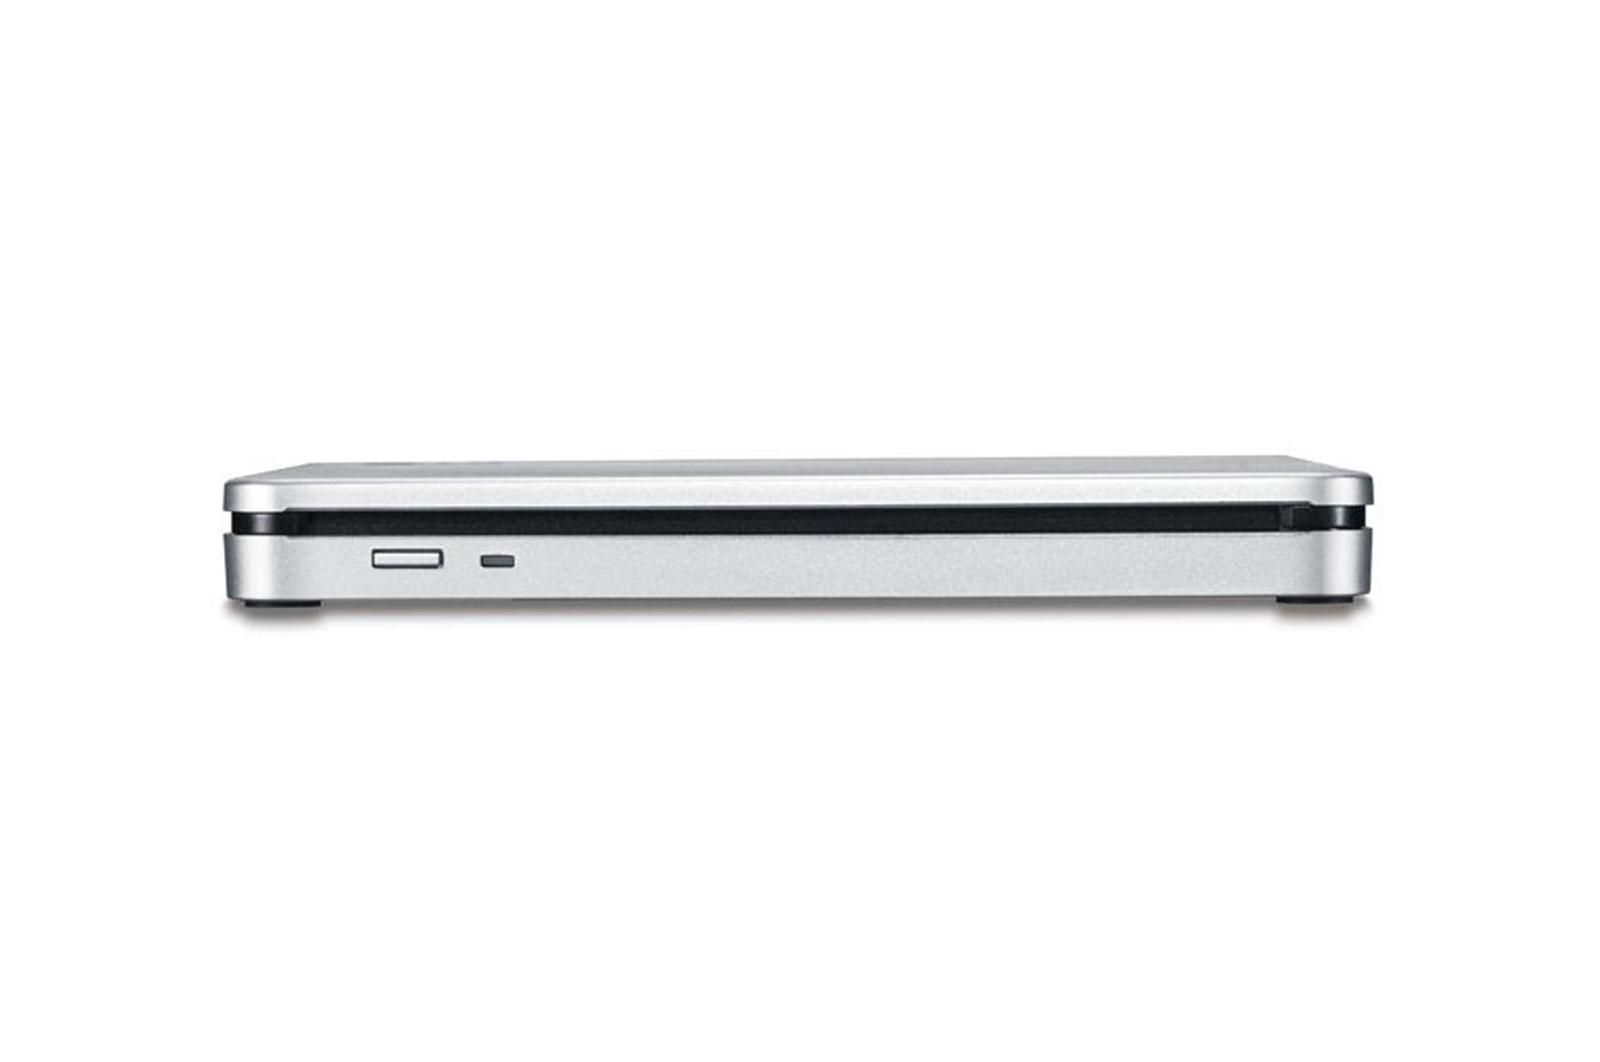 Ultra Slim Portable DVD-R Silver Hitachi-LG GP60NS6, GP60NS60 Series, DVD Write /Read Speed: 8x, CD Write/Read Speed: 24x, USB 2.0, Buffer 0.75MB, 144 mm x 137.5 mm x 14 mm._4